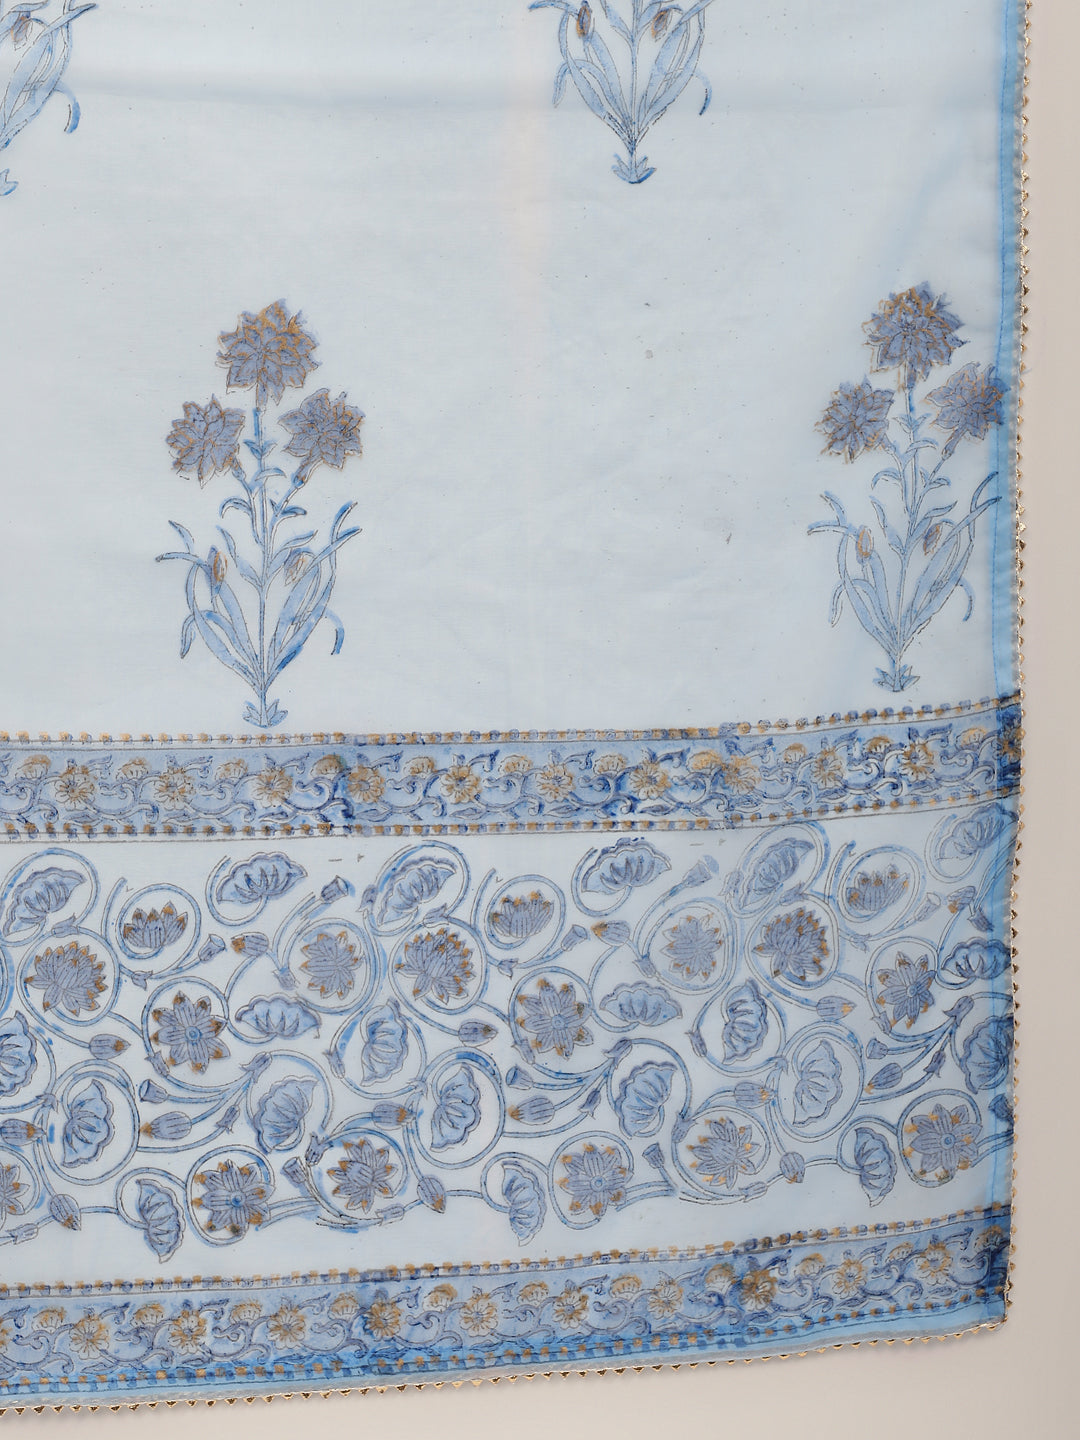 Women's Sky Blue Floral Printed Organza Anarkali Kurta Dupatta Set With Cotton Lining - Noz2Toz